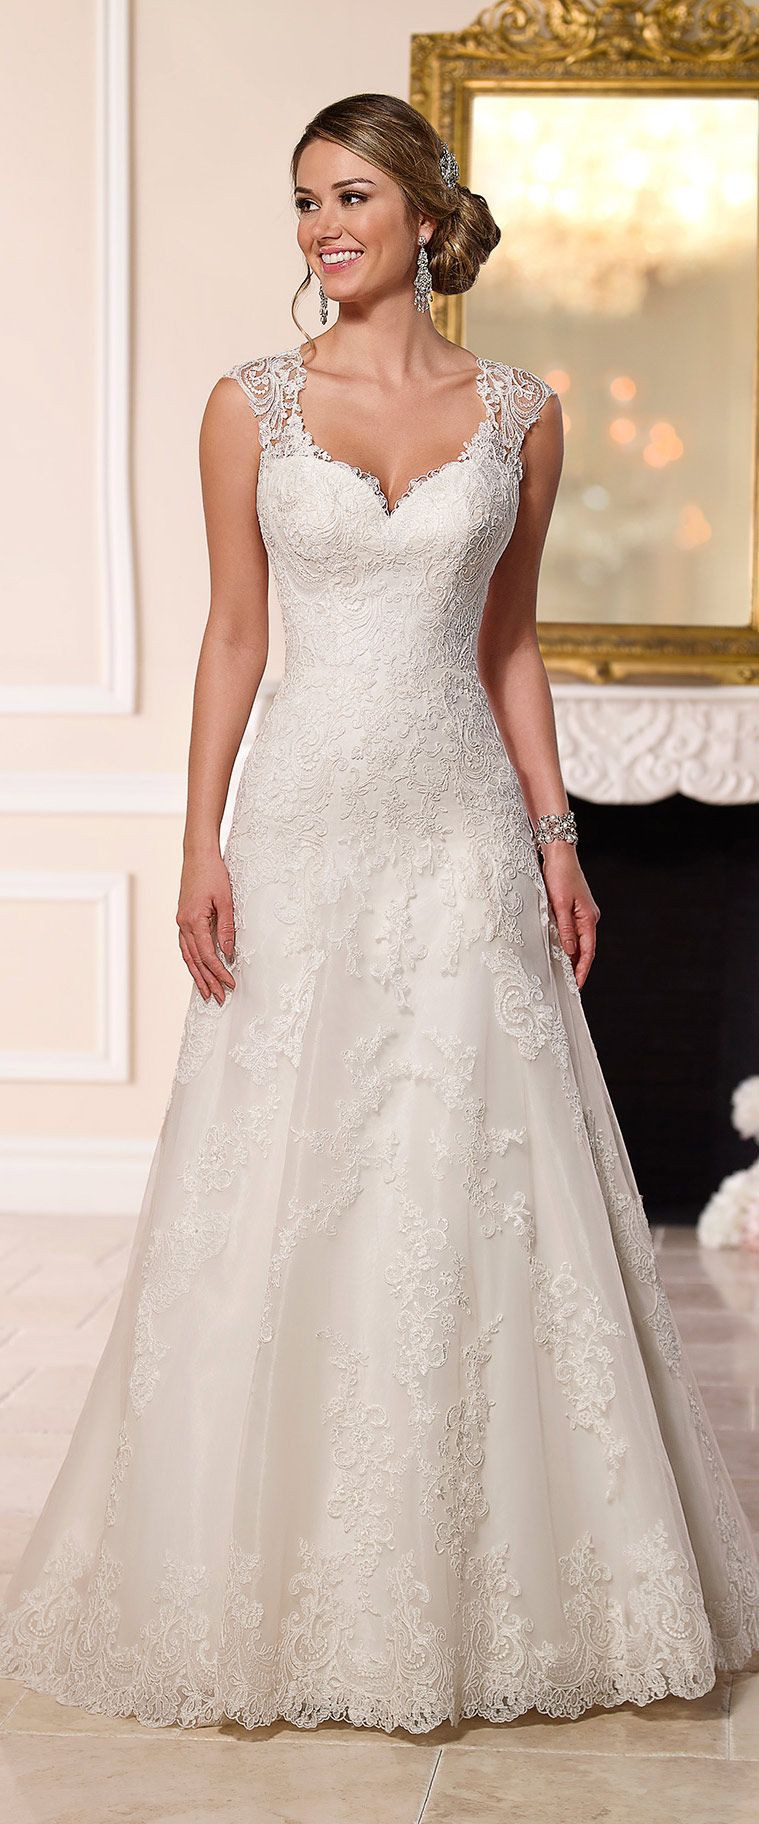 Lace Wedding Dress Pinterest
 Stella York A line lace wedding dress 2016